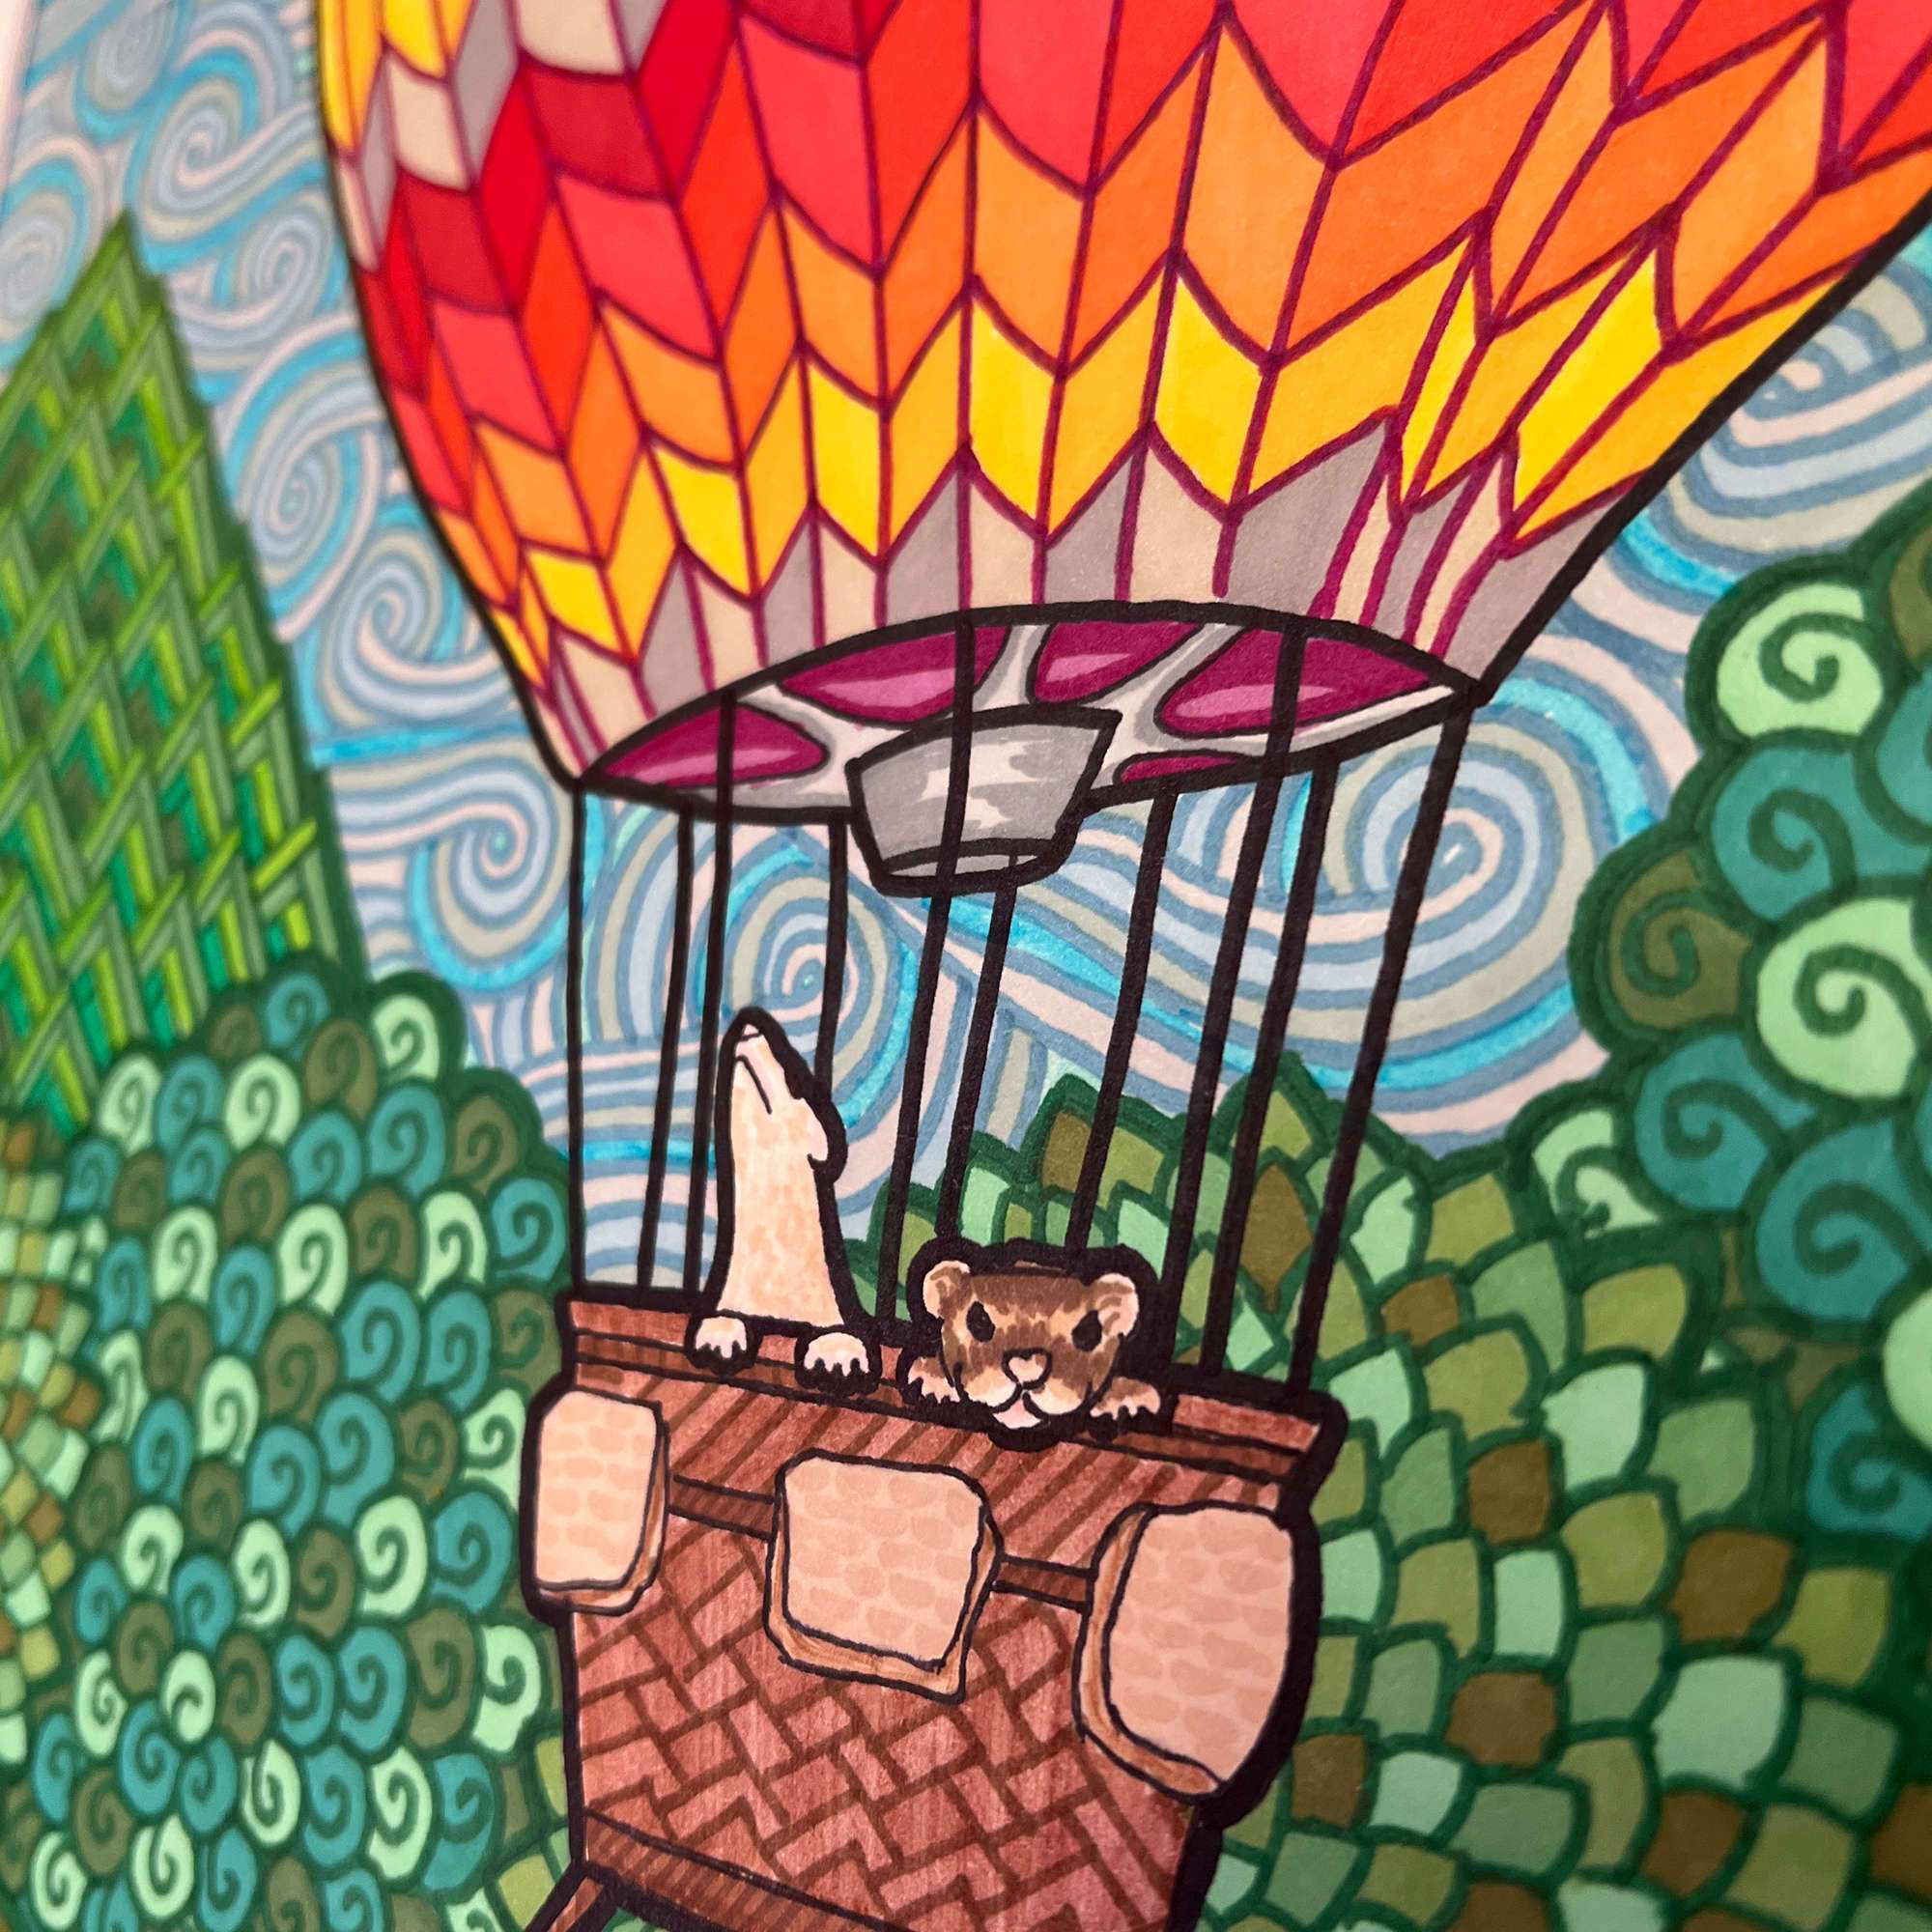 Vibrant close-up of an original marker illustration of ferrets enjoying a hot air balloon ride